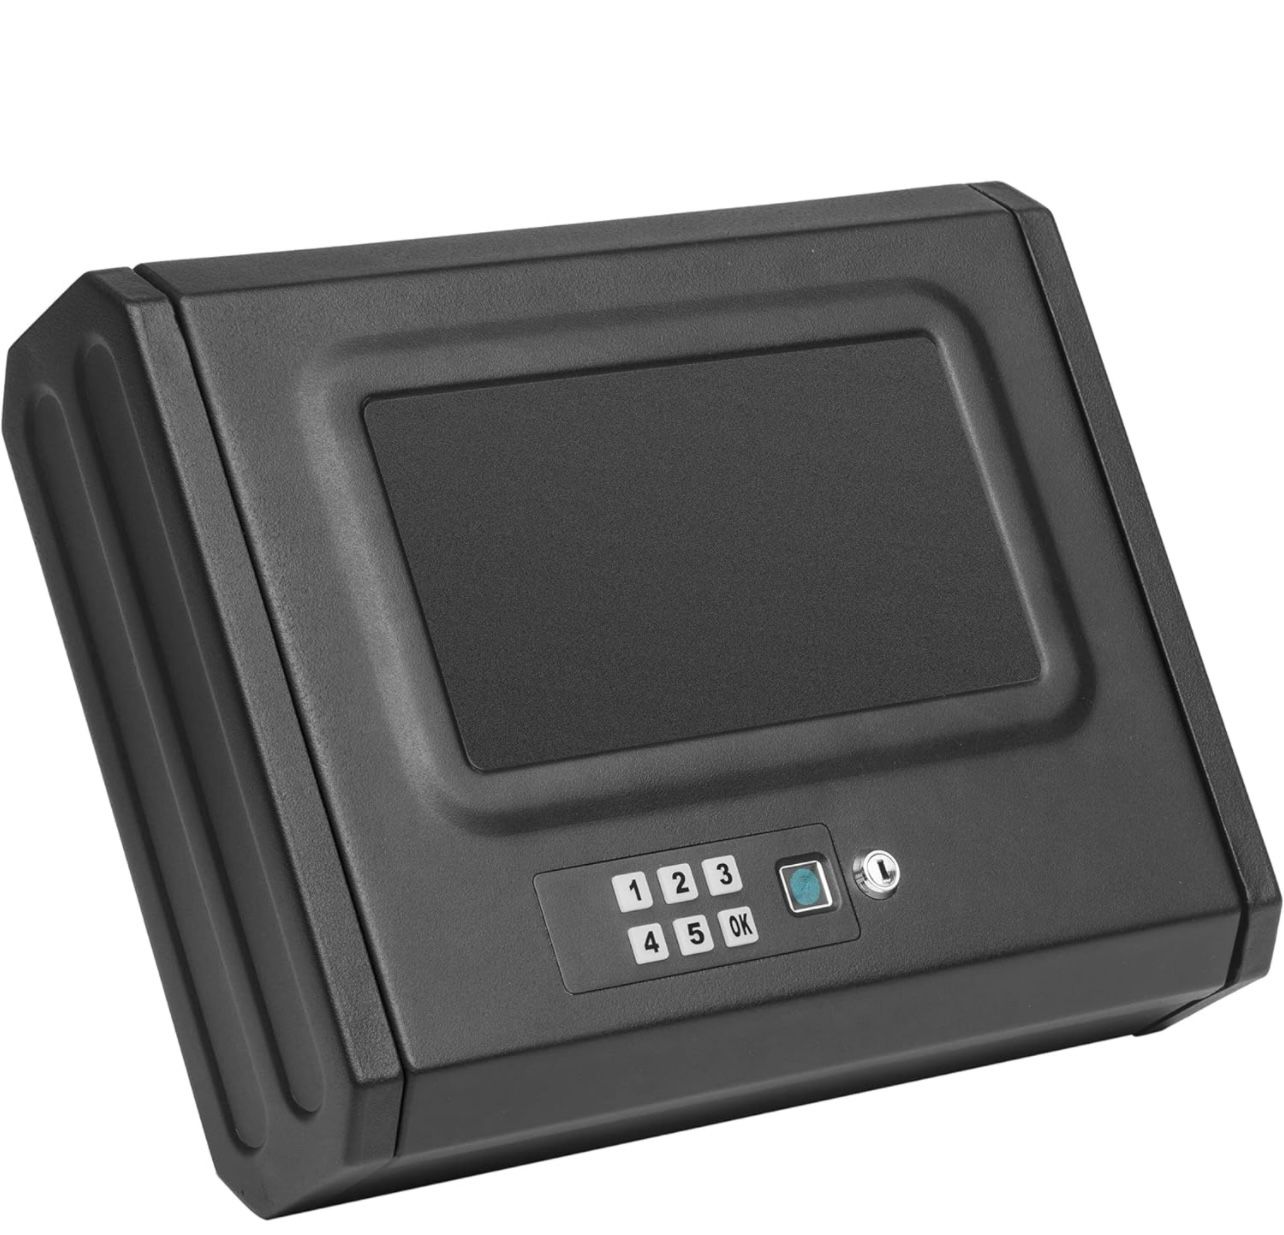 n Safe, Biometric Gun Safes for pistol with LCD of Battery, USB-C Port, Fingerprint Quick Access Handgun Safe Portable for Car Bedside Nightstan